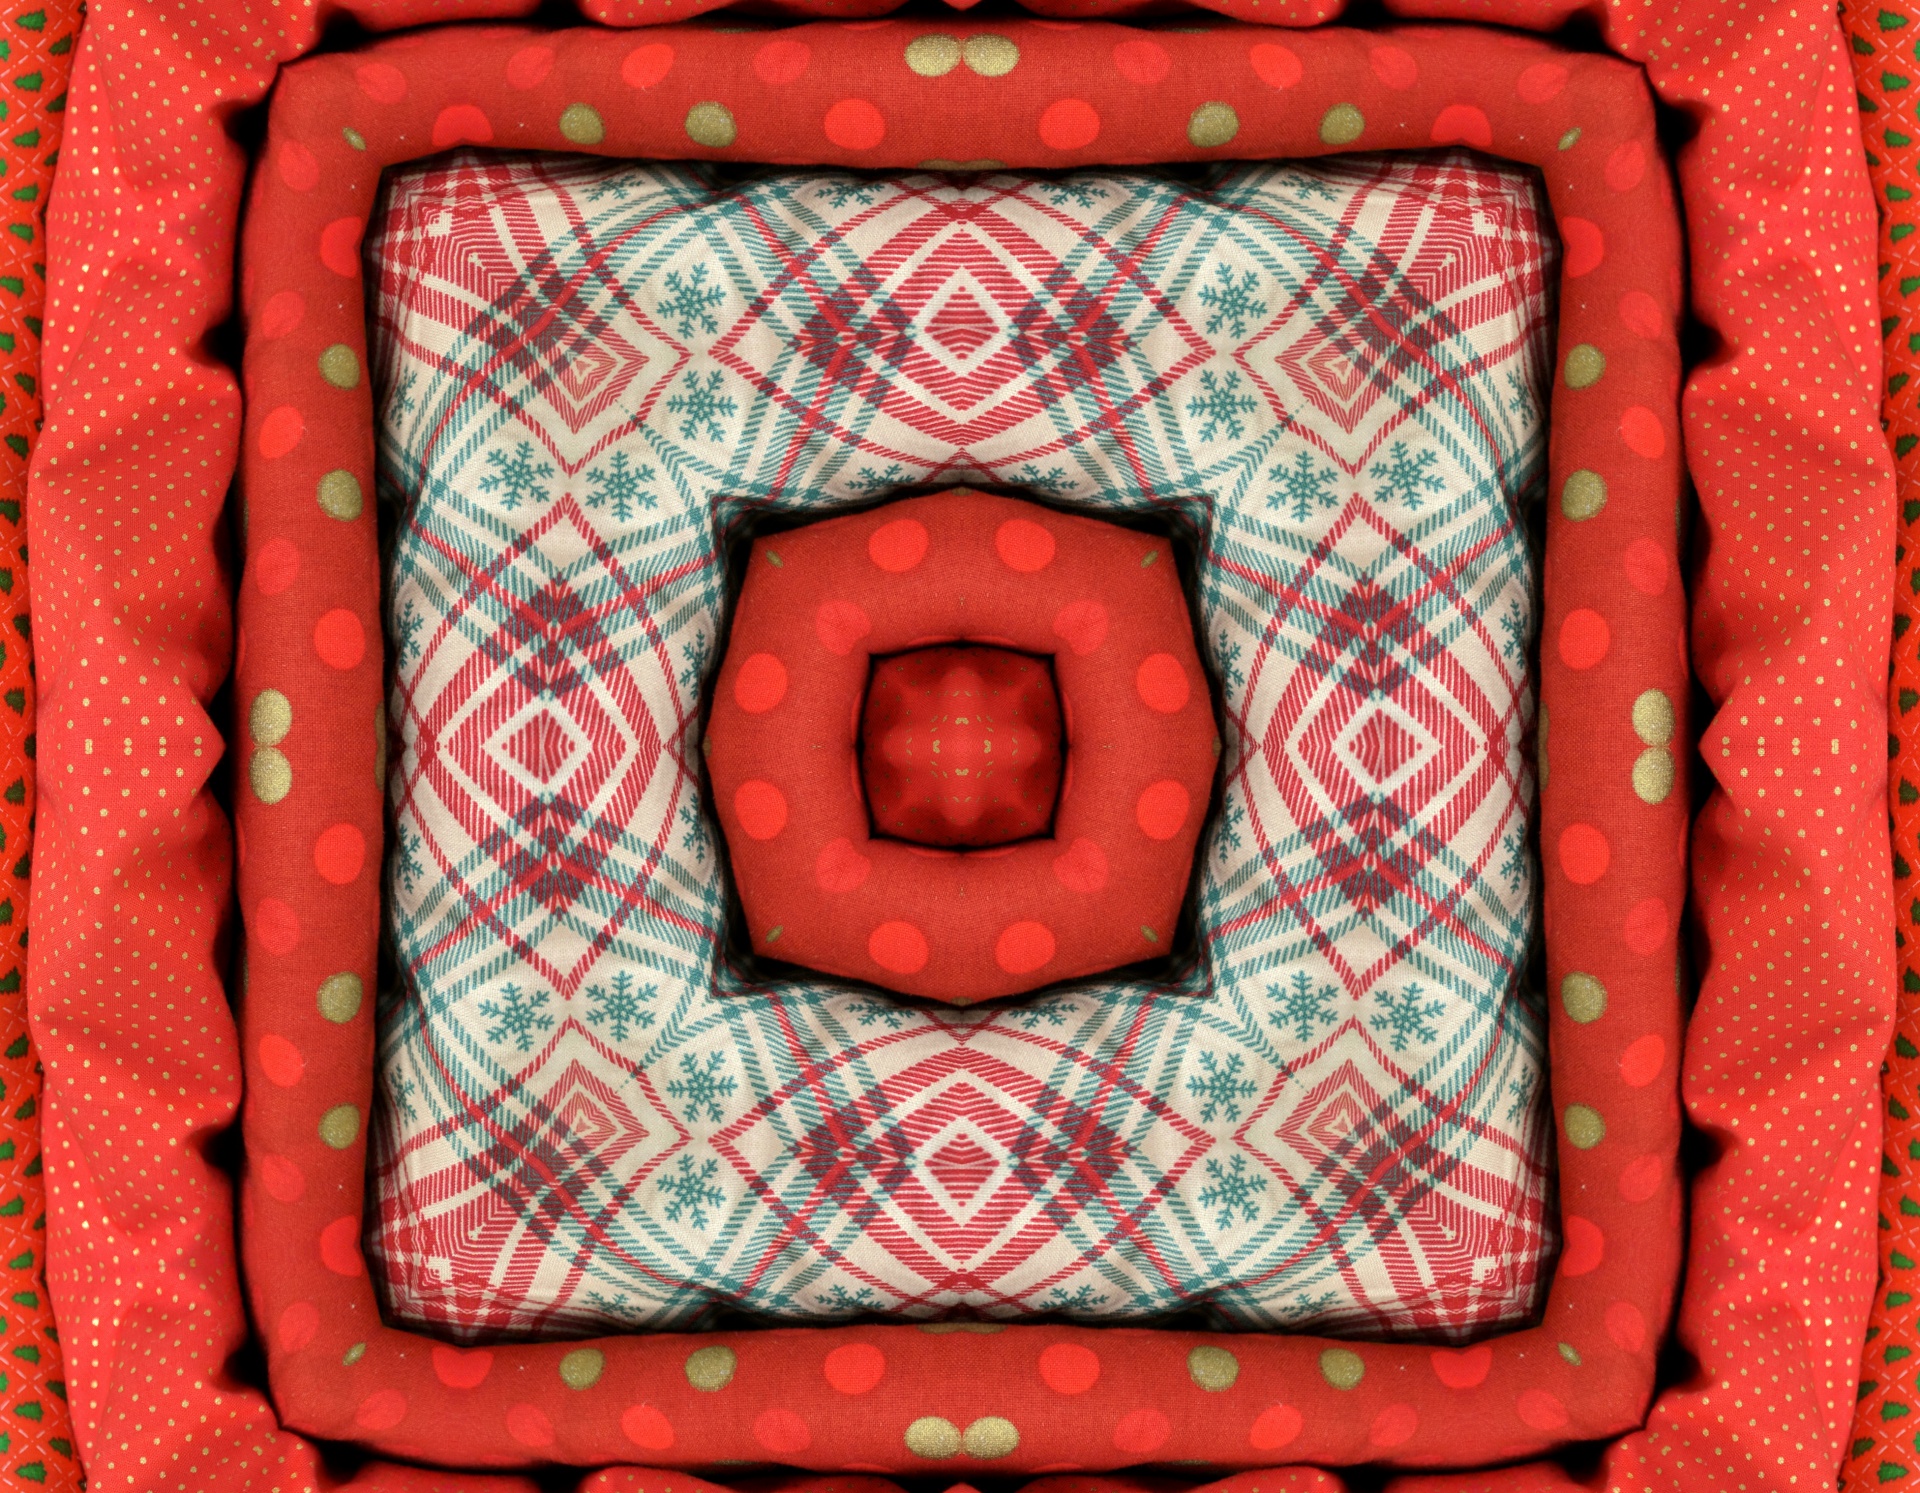 Background of a square xmas Kaleidoscope pattern